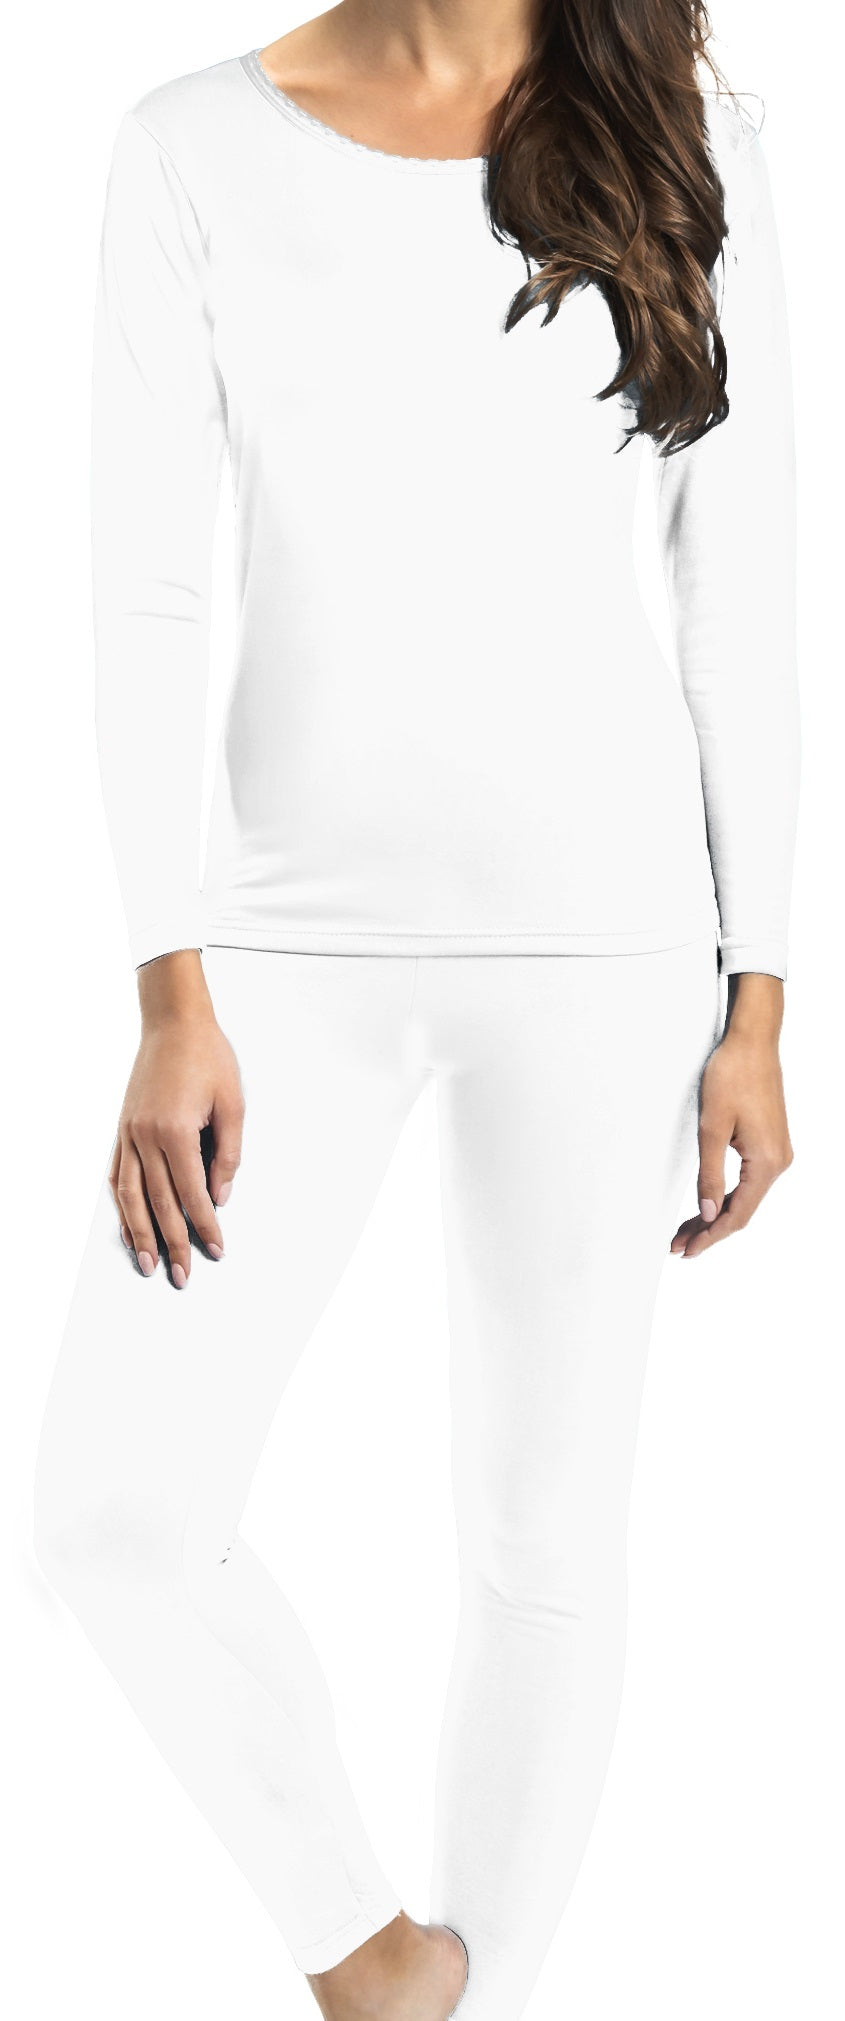 Rocky Thermal Underwear for Women (Thermal Long Johns Set) Shirt & Pants, Base  Layer w/Leggings/Bottoms Ski/Extreme Cold - Buy Online - 52298558